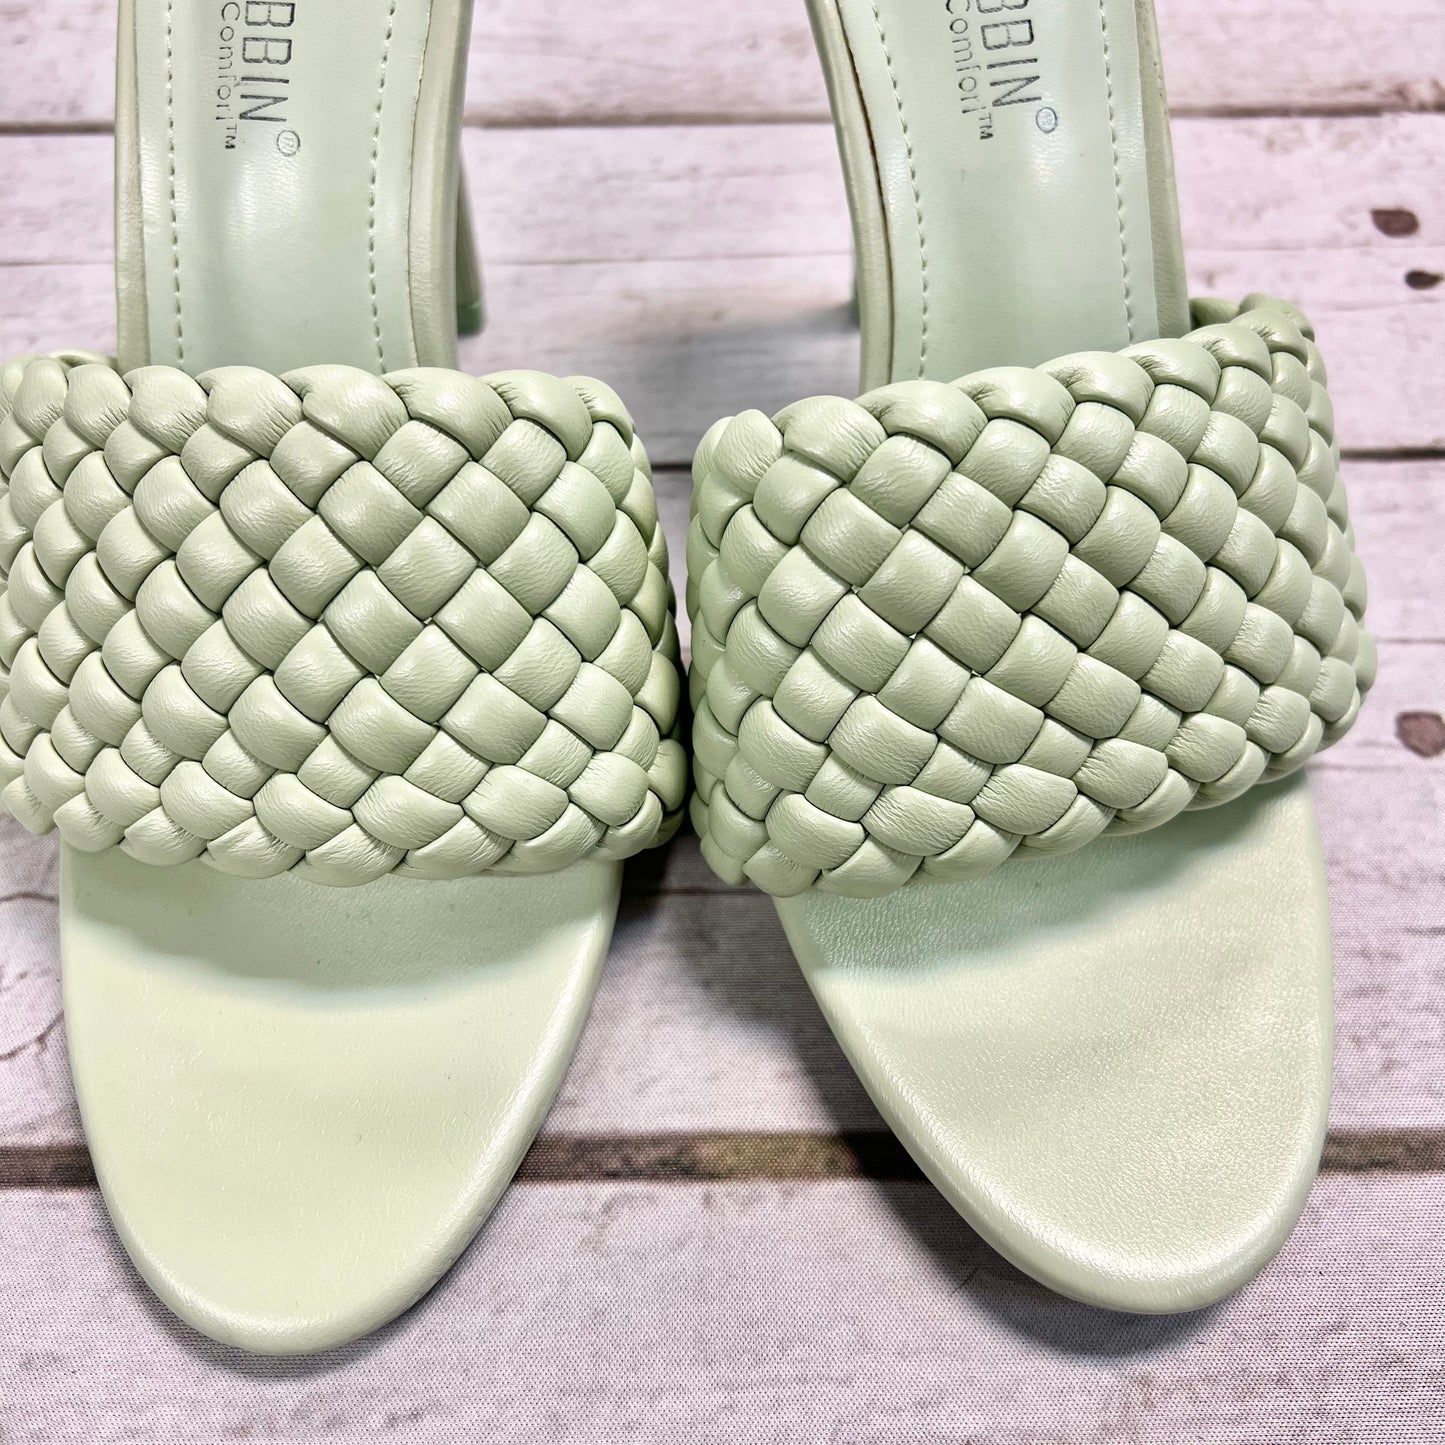 Sandals Heels Stiletto By Cape Robbin  Size: 7